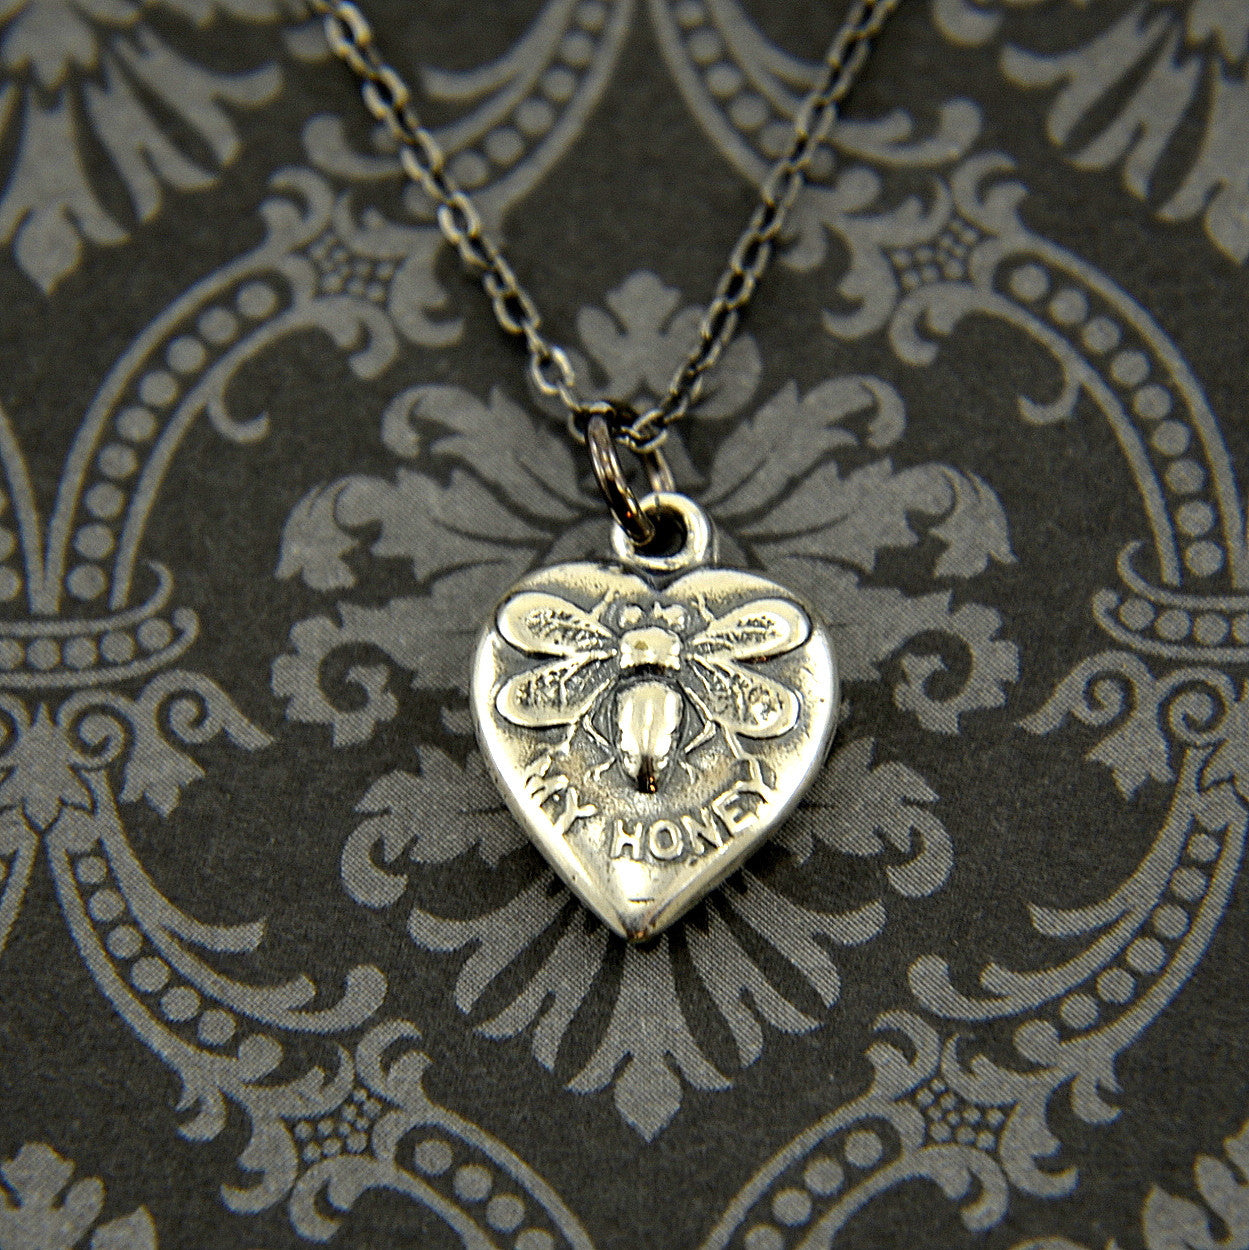 Vintage Heart Honey Bee Necklace - Gwen Delicious Jewelry Designs